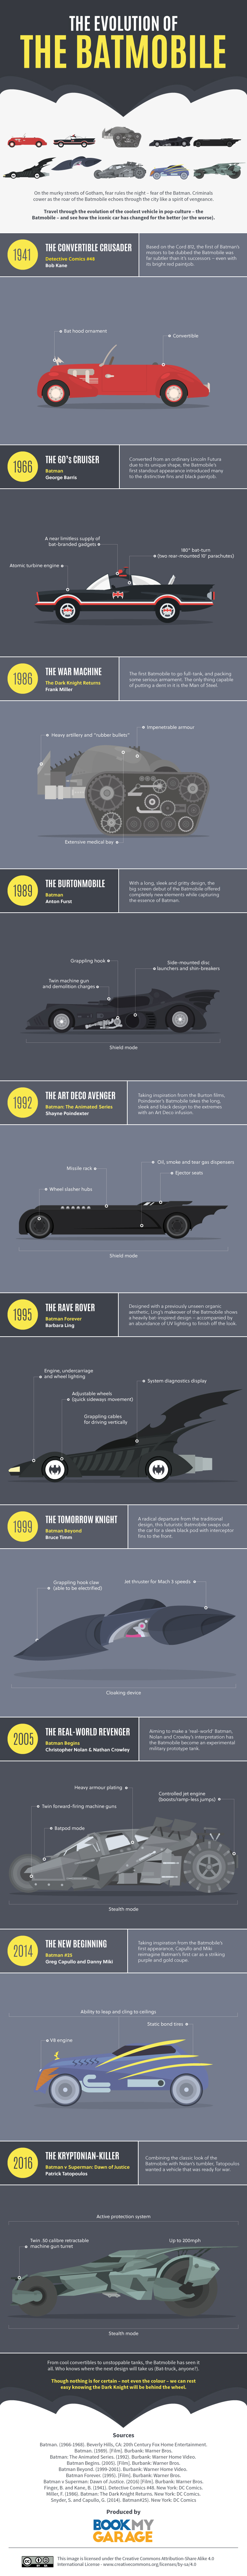 The Evolution of the Batmobile